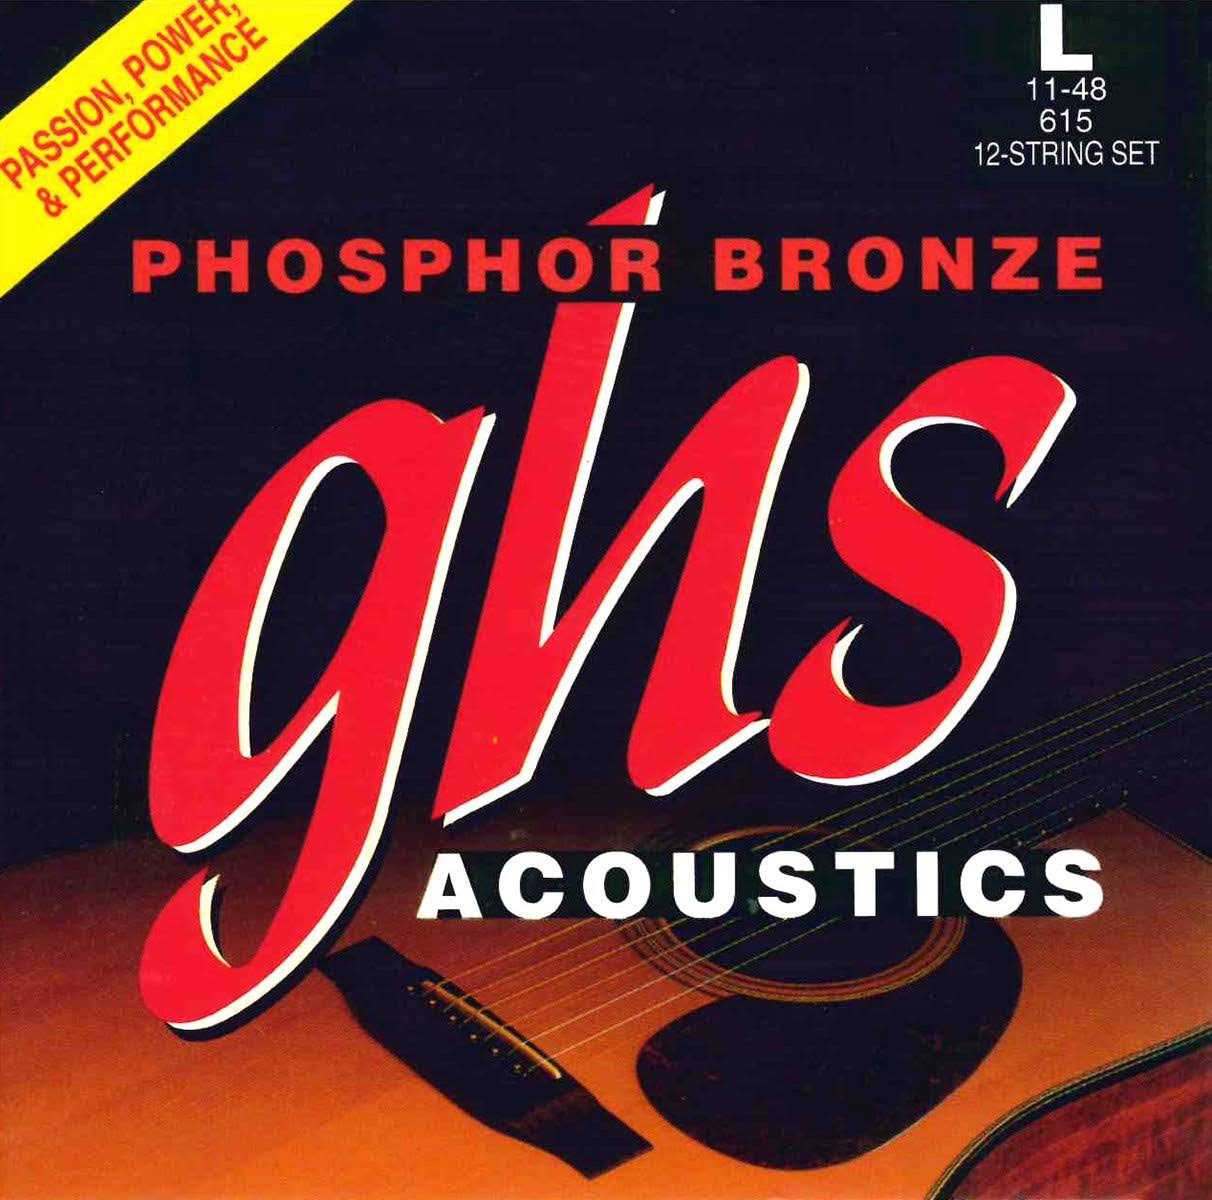 GHS 615 Phosphor Bronze Acoustic Guitar Strings - Light, 12 Strings